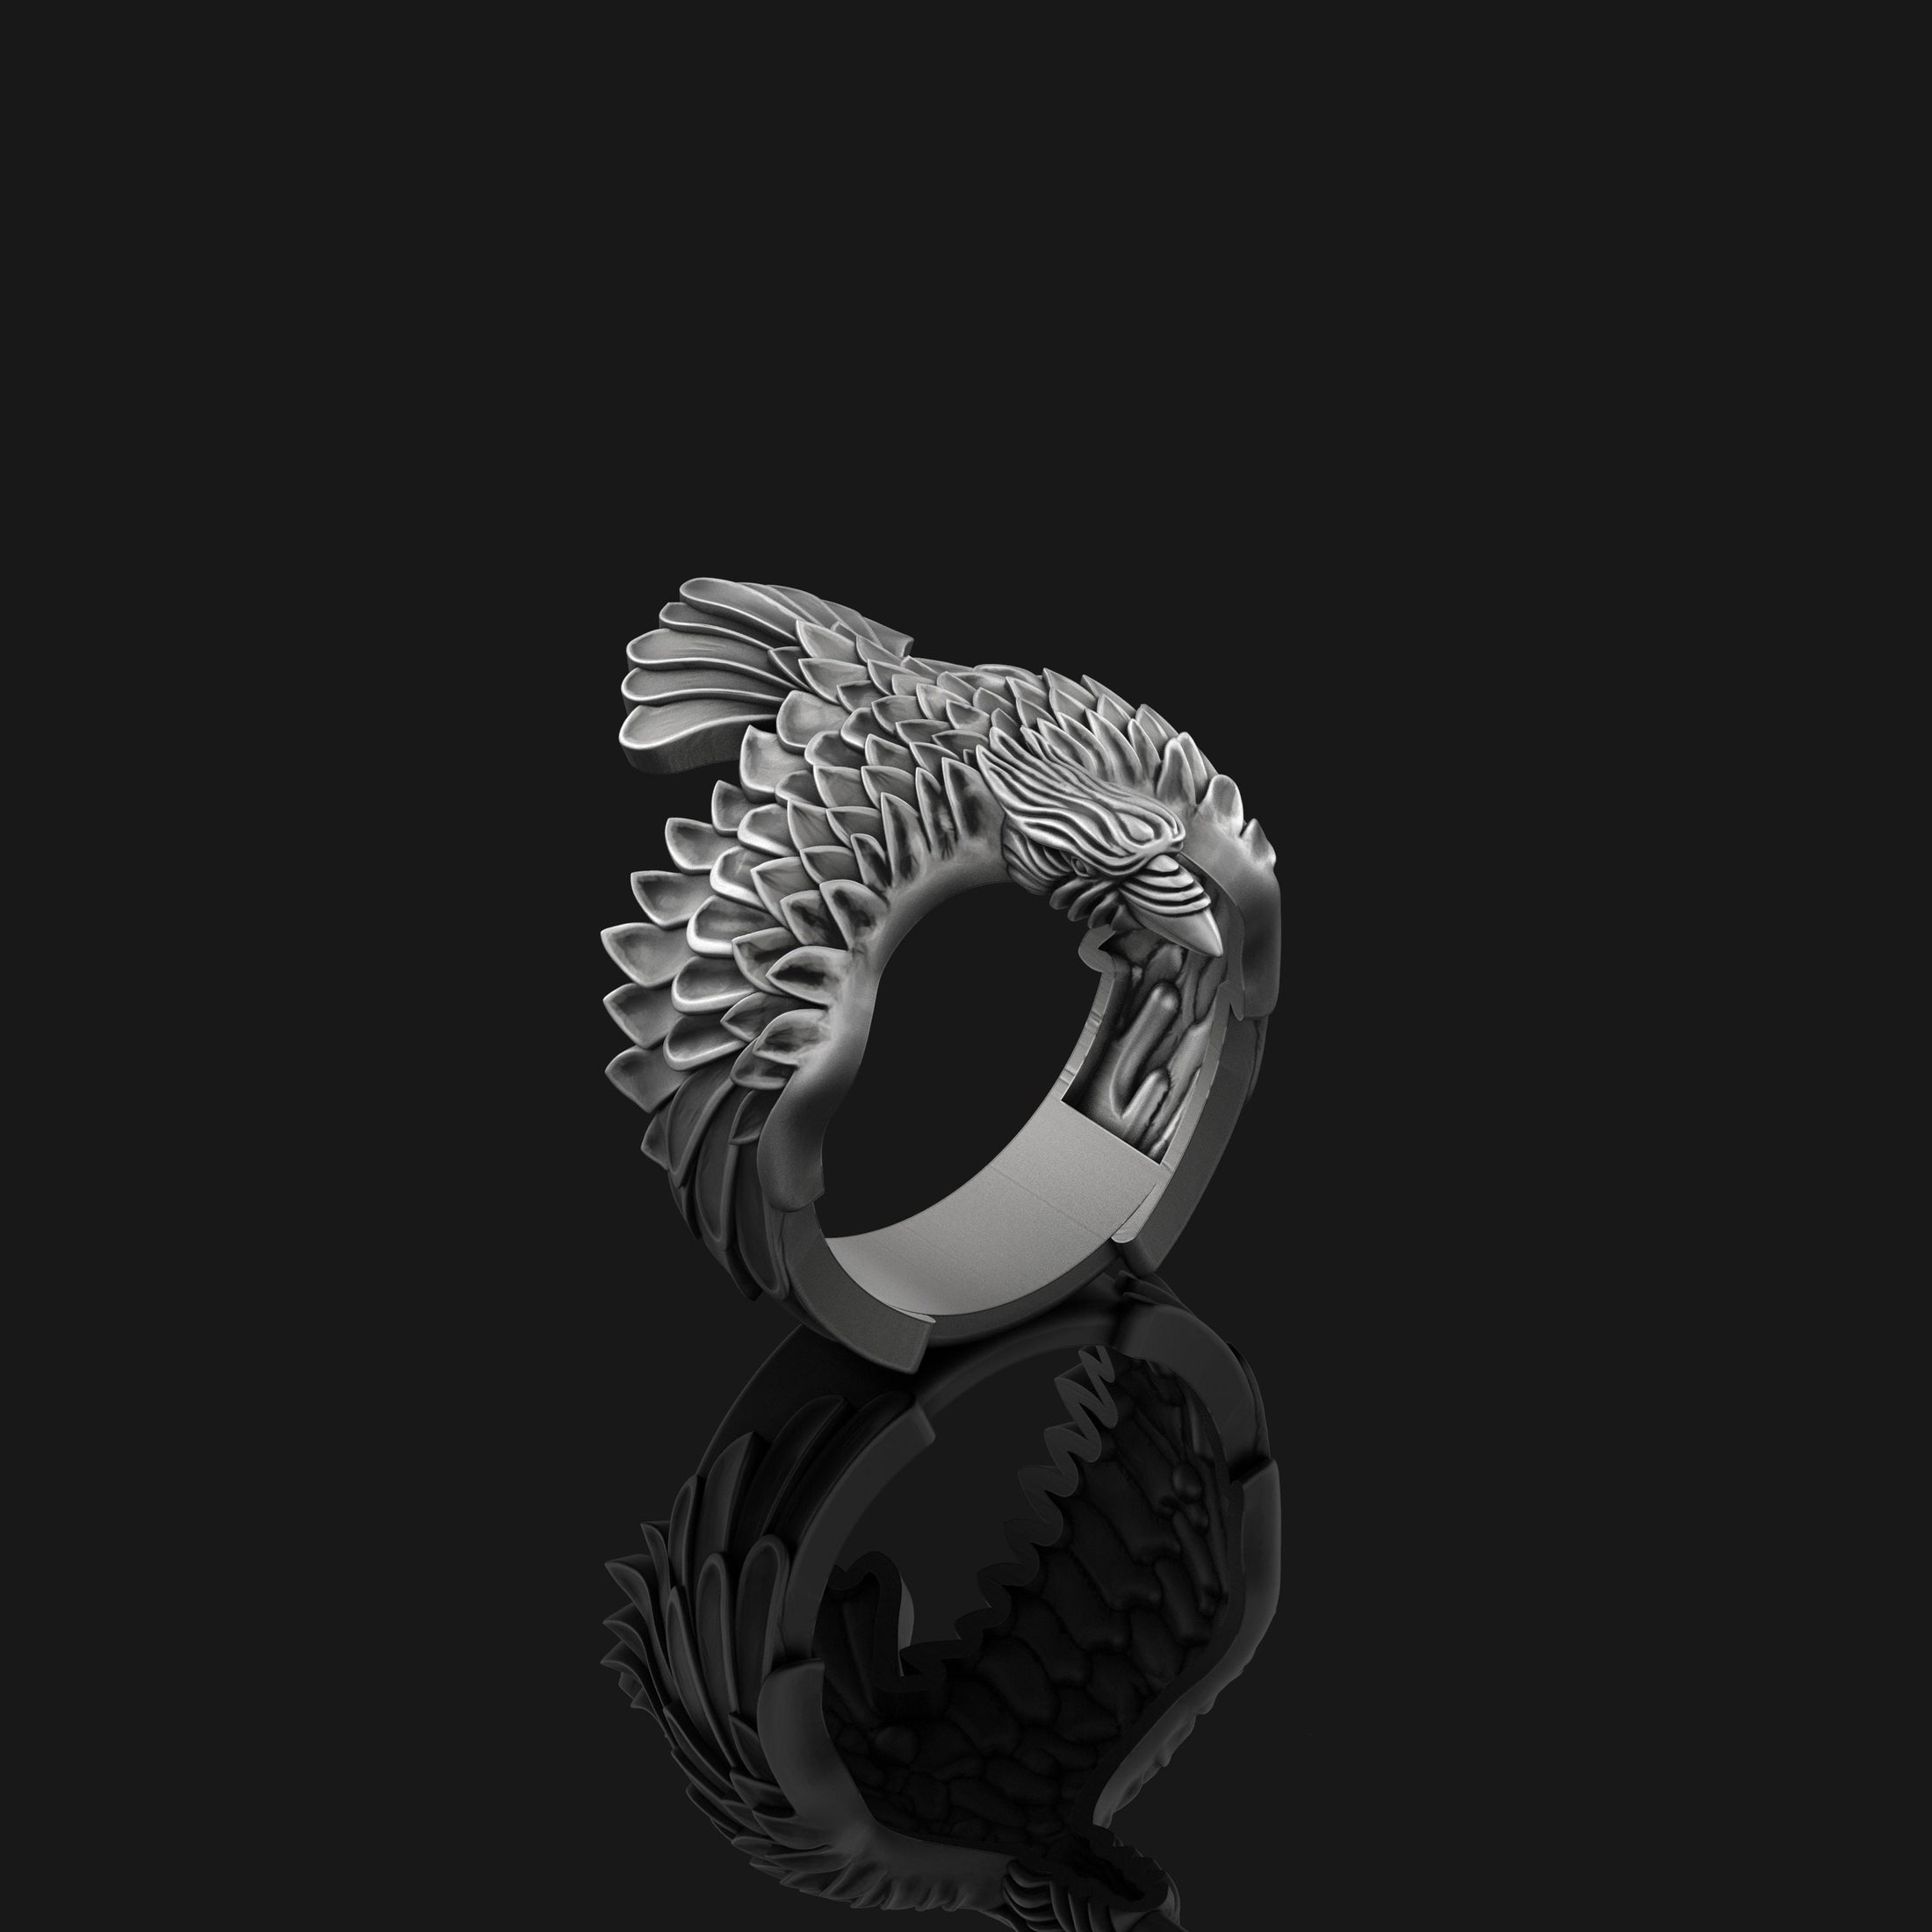 Silver Eagle Ring - Majestic Bird of Prey Jewelry, Patriotic Symbol Ring, Elegant Men's Gift